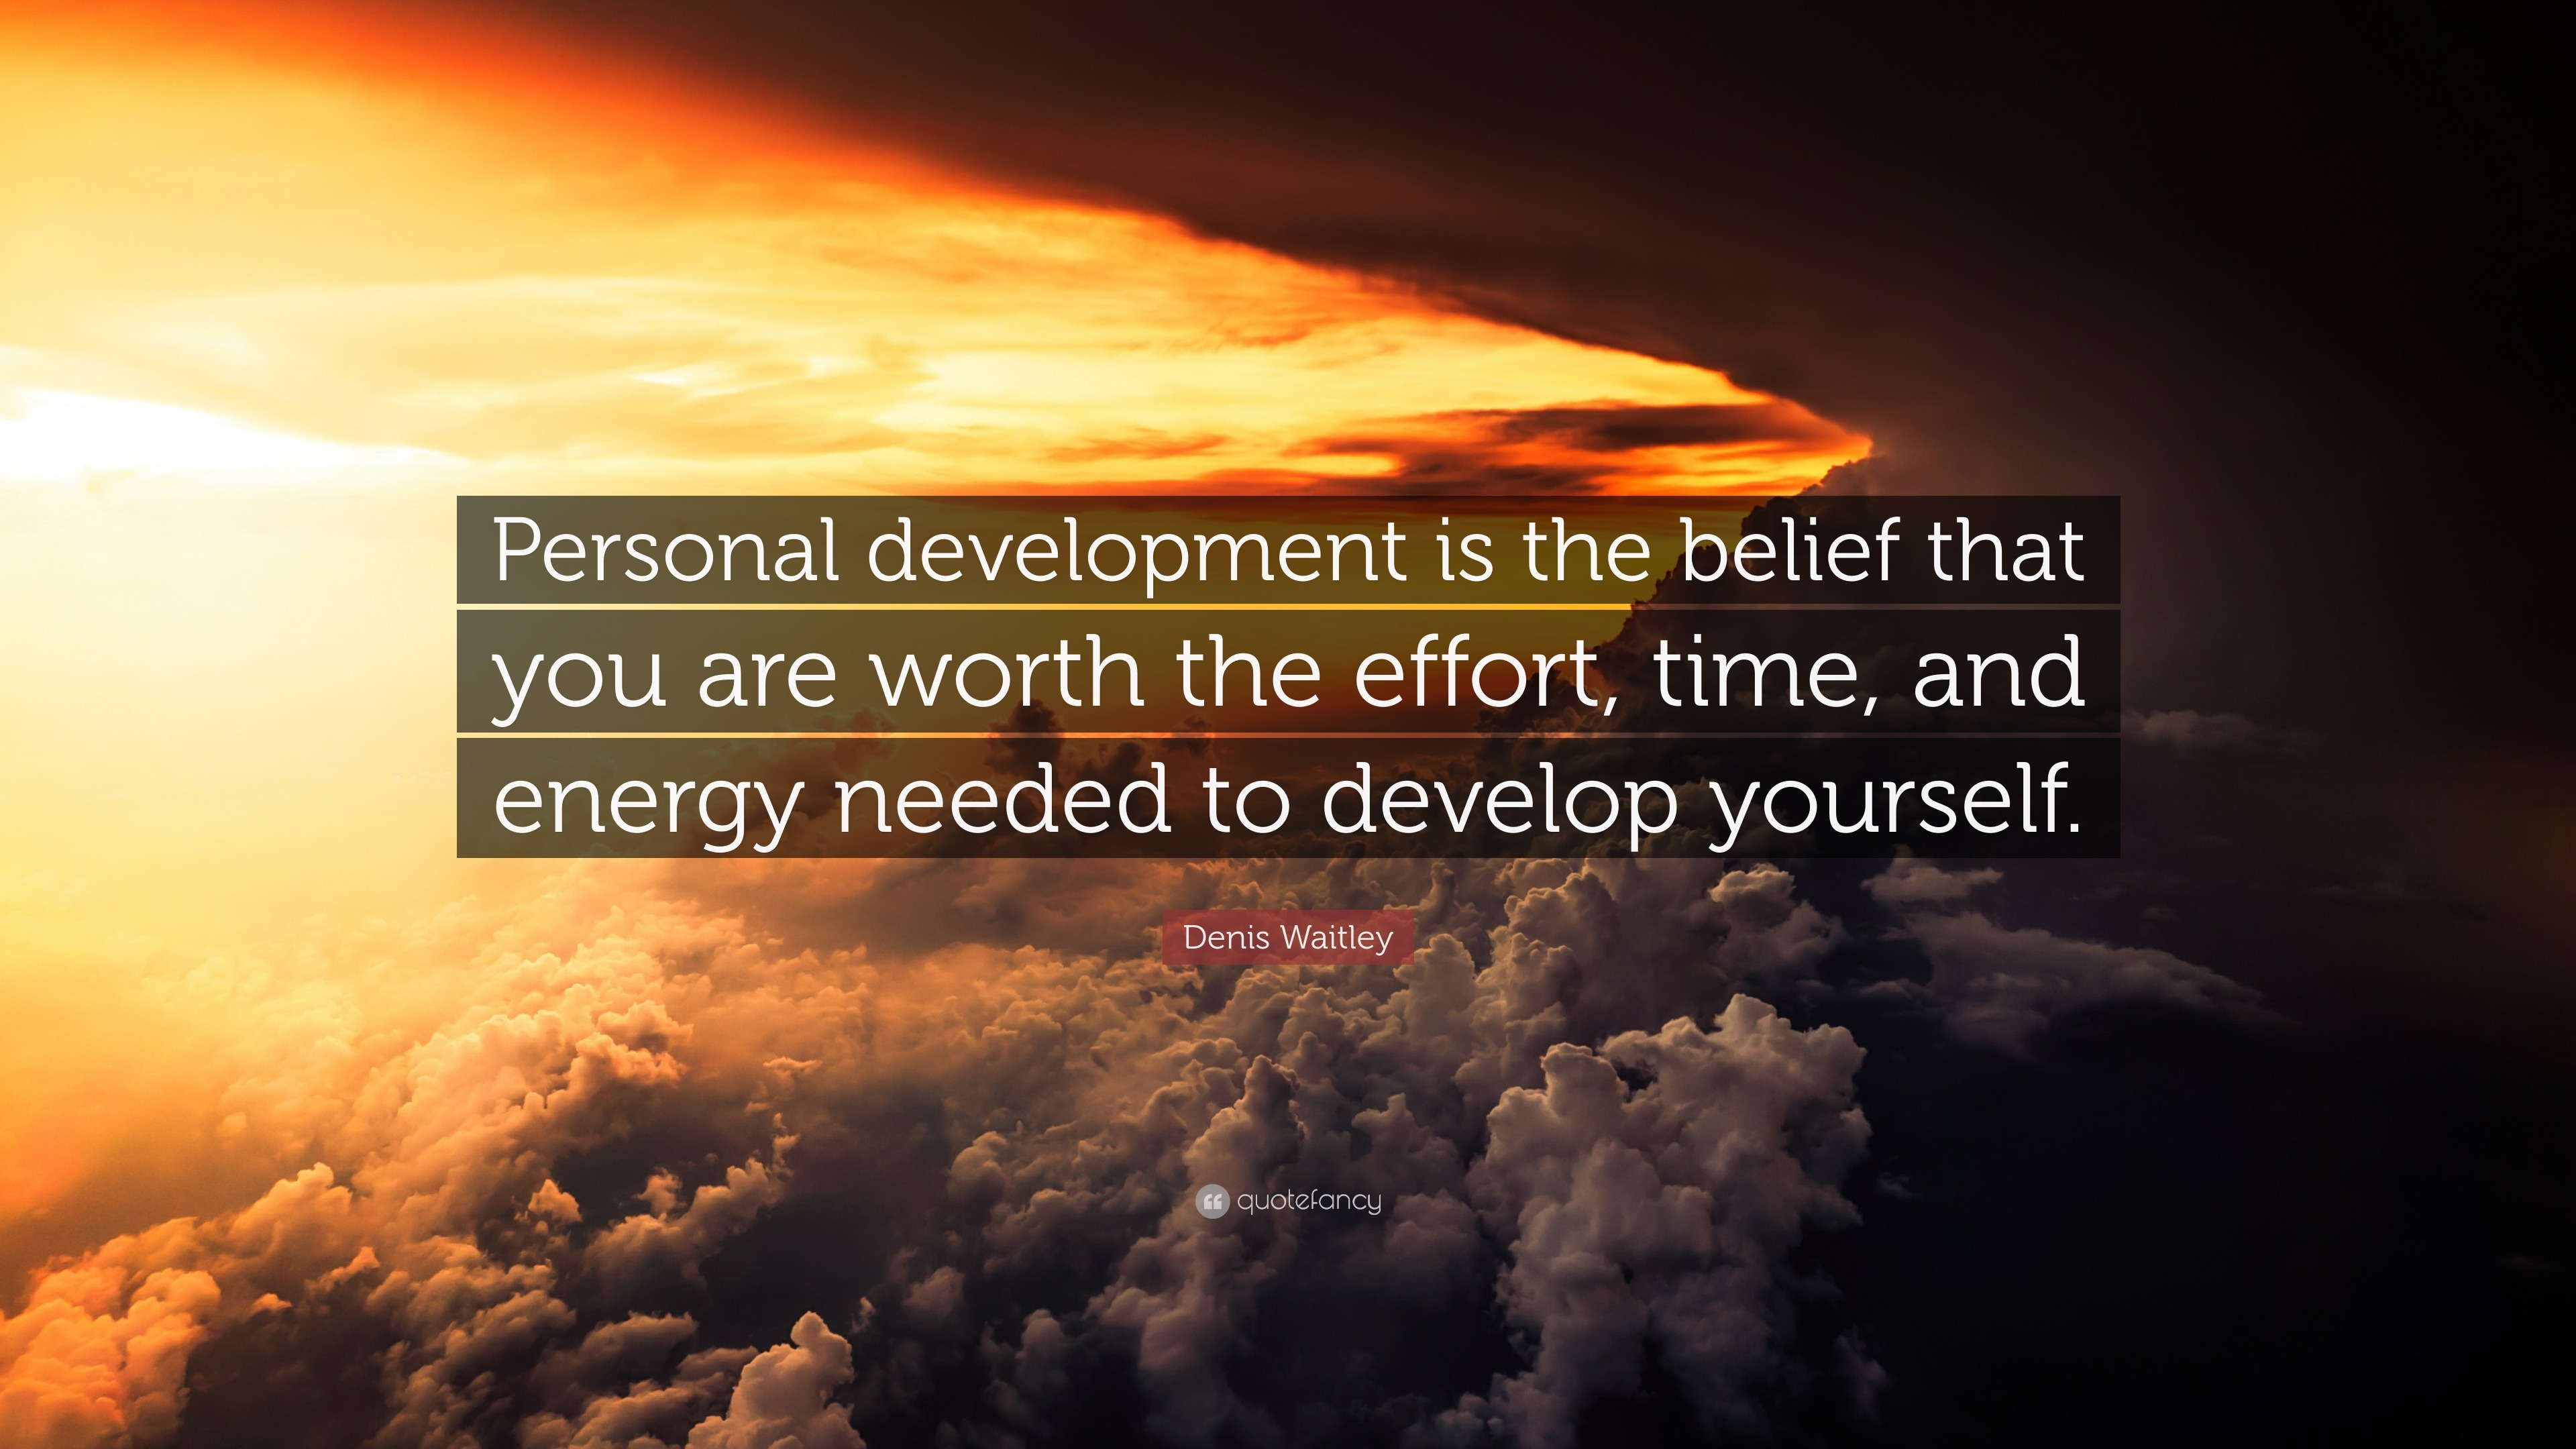 Denis Waitley Quote: "Personal development is the belief ...